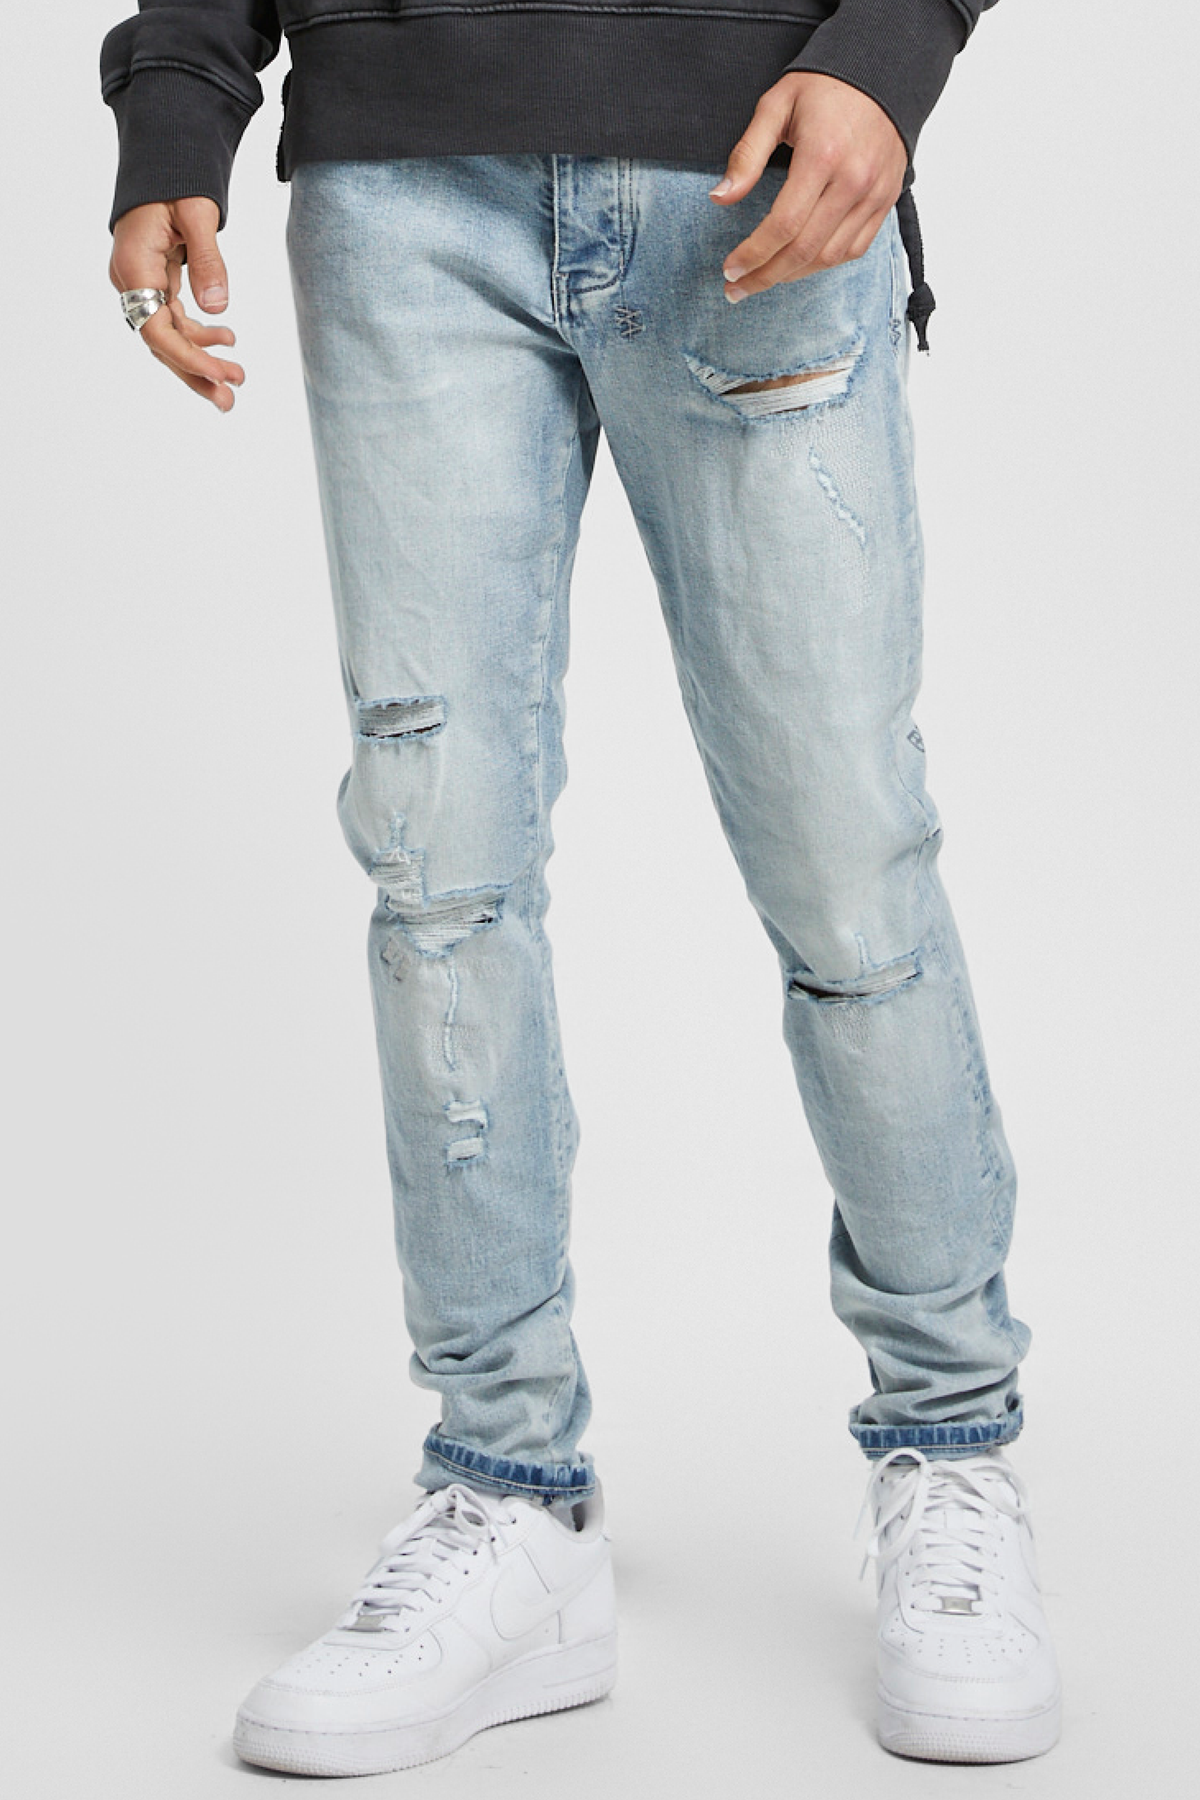 Ksubi Chitch Punk Blue Jeans - Denim